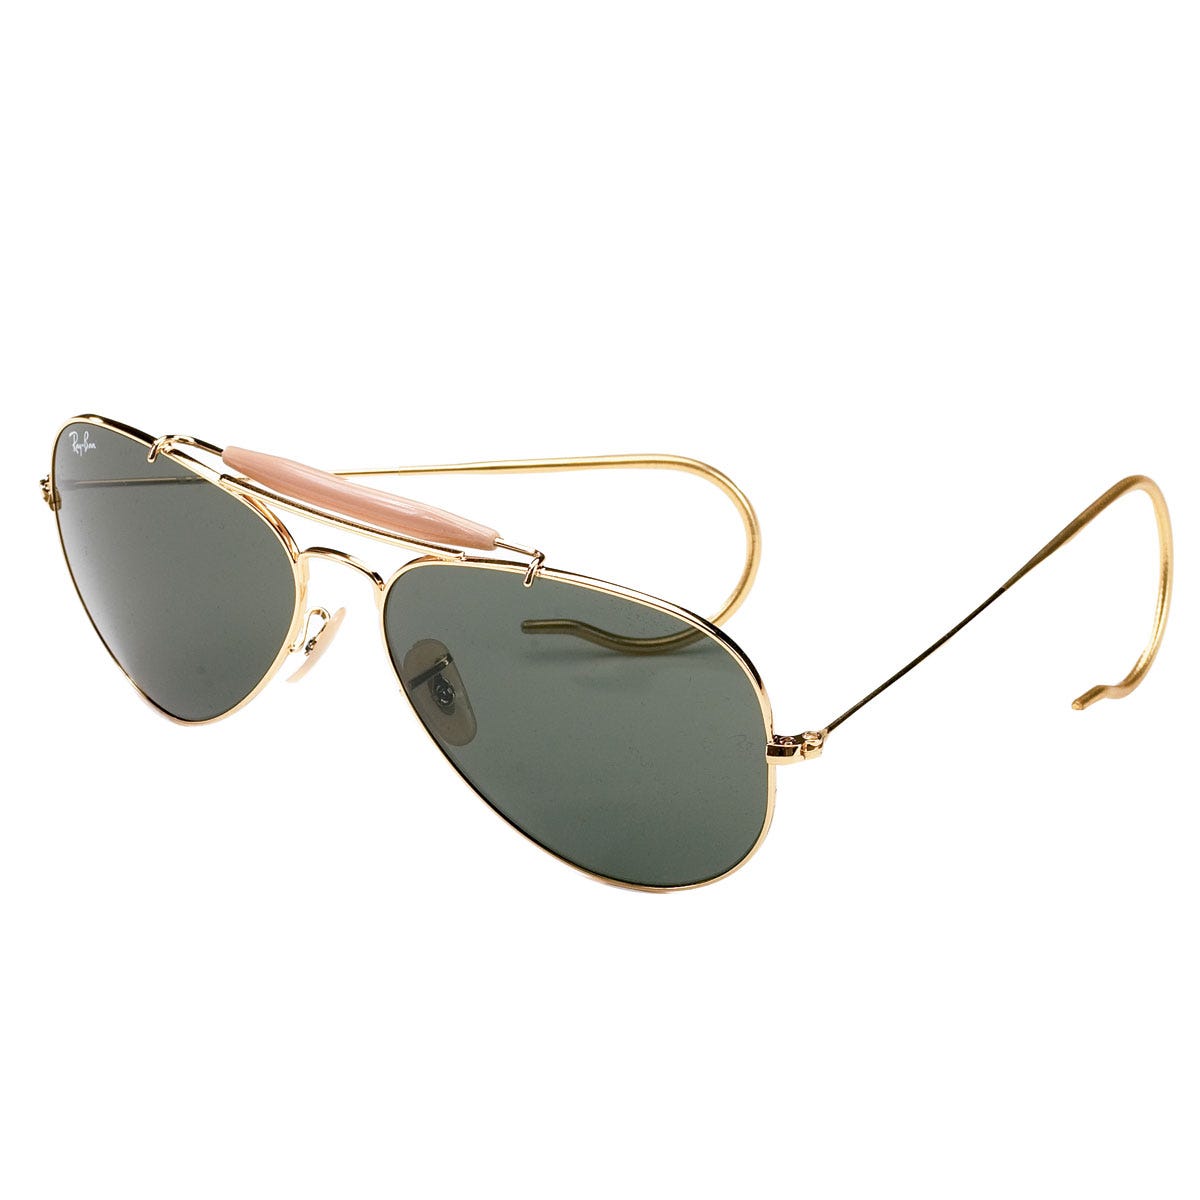 Ray-Ban Aviator Outdoorsman Sunglasses (58mm Gold Frame